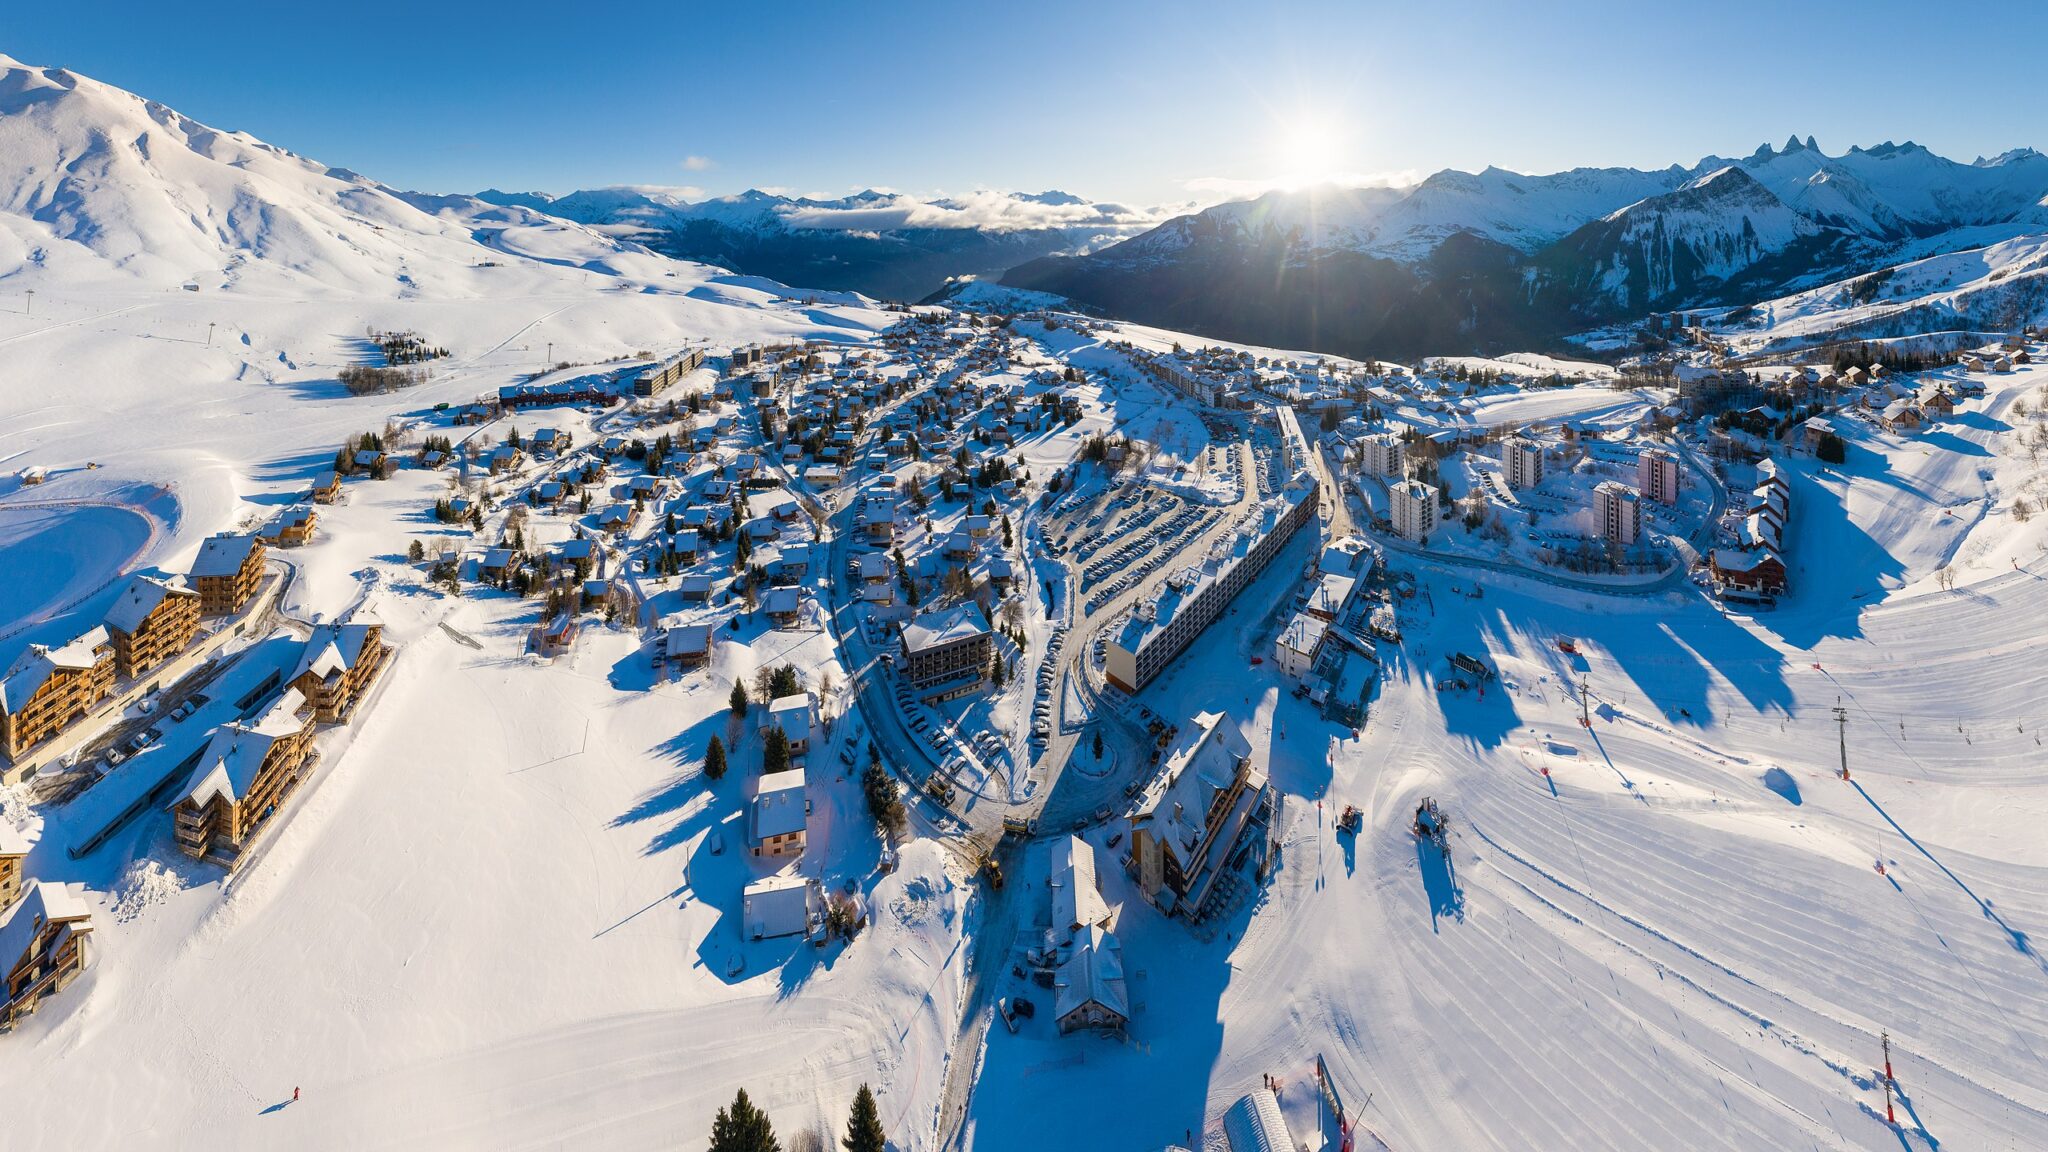 La Toussuire ski resort